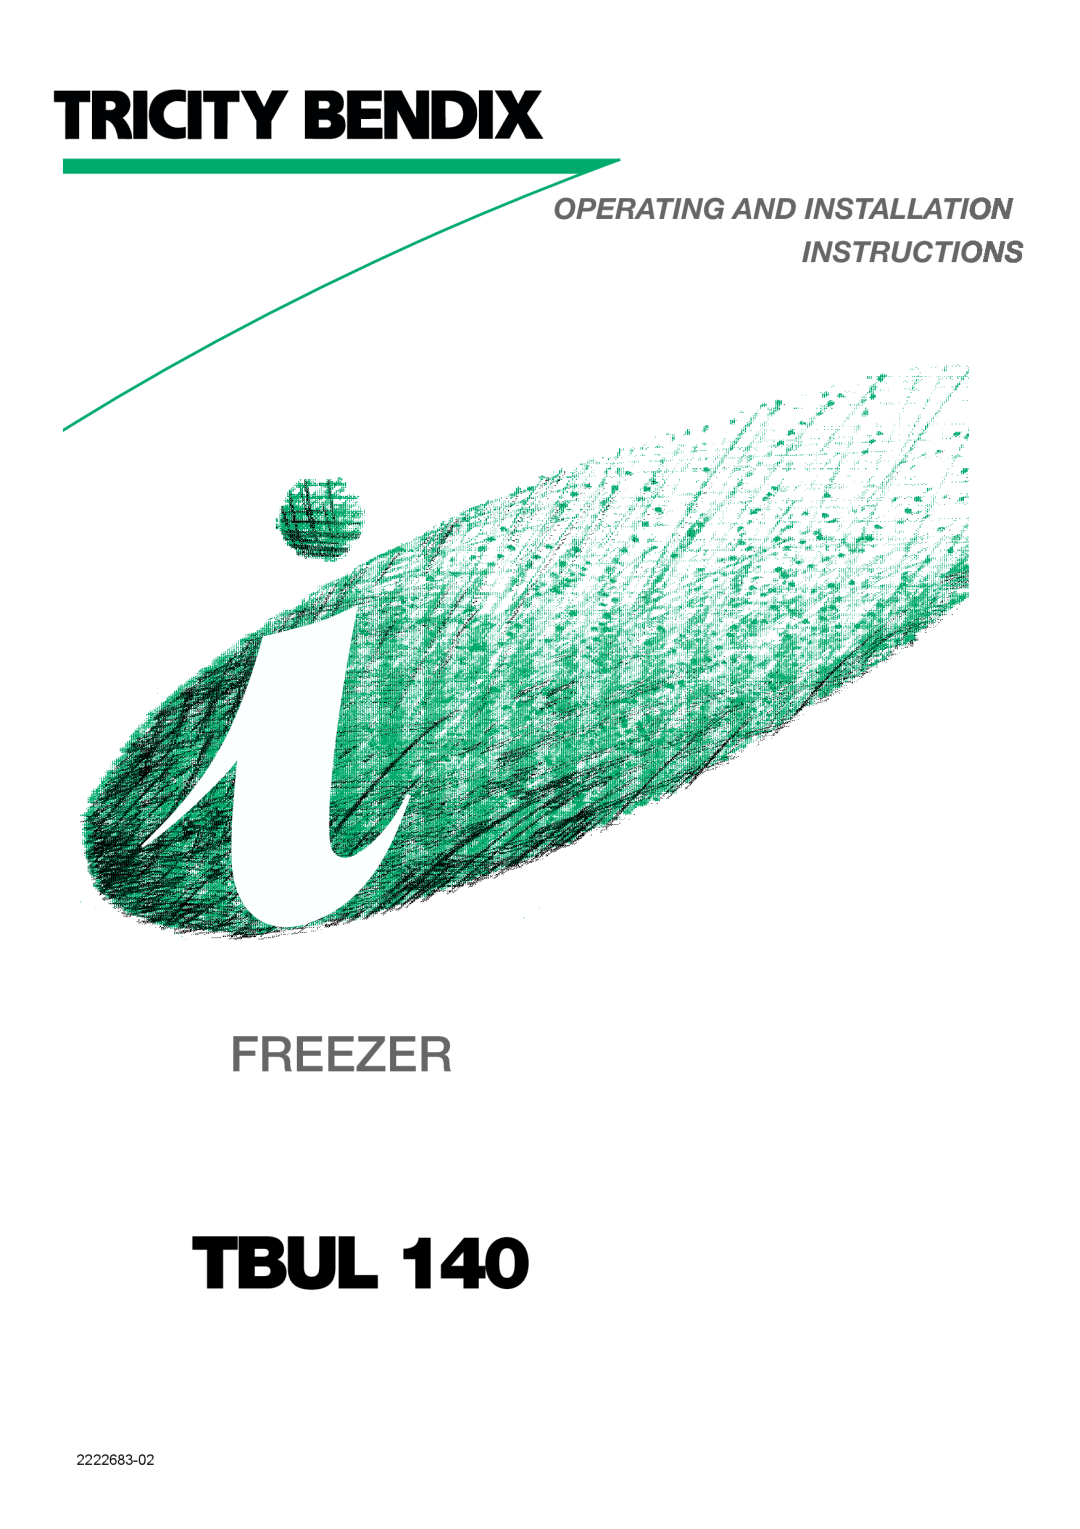 Tricity Bendix TBUL 140 installation instructions Tbul, Freezer, Operating And Installation Instructions, 2222683-02 